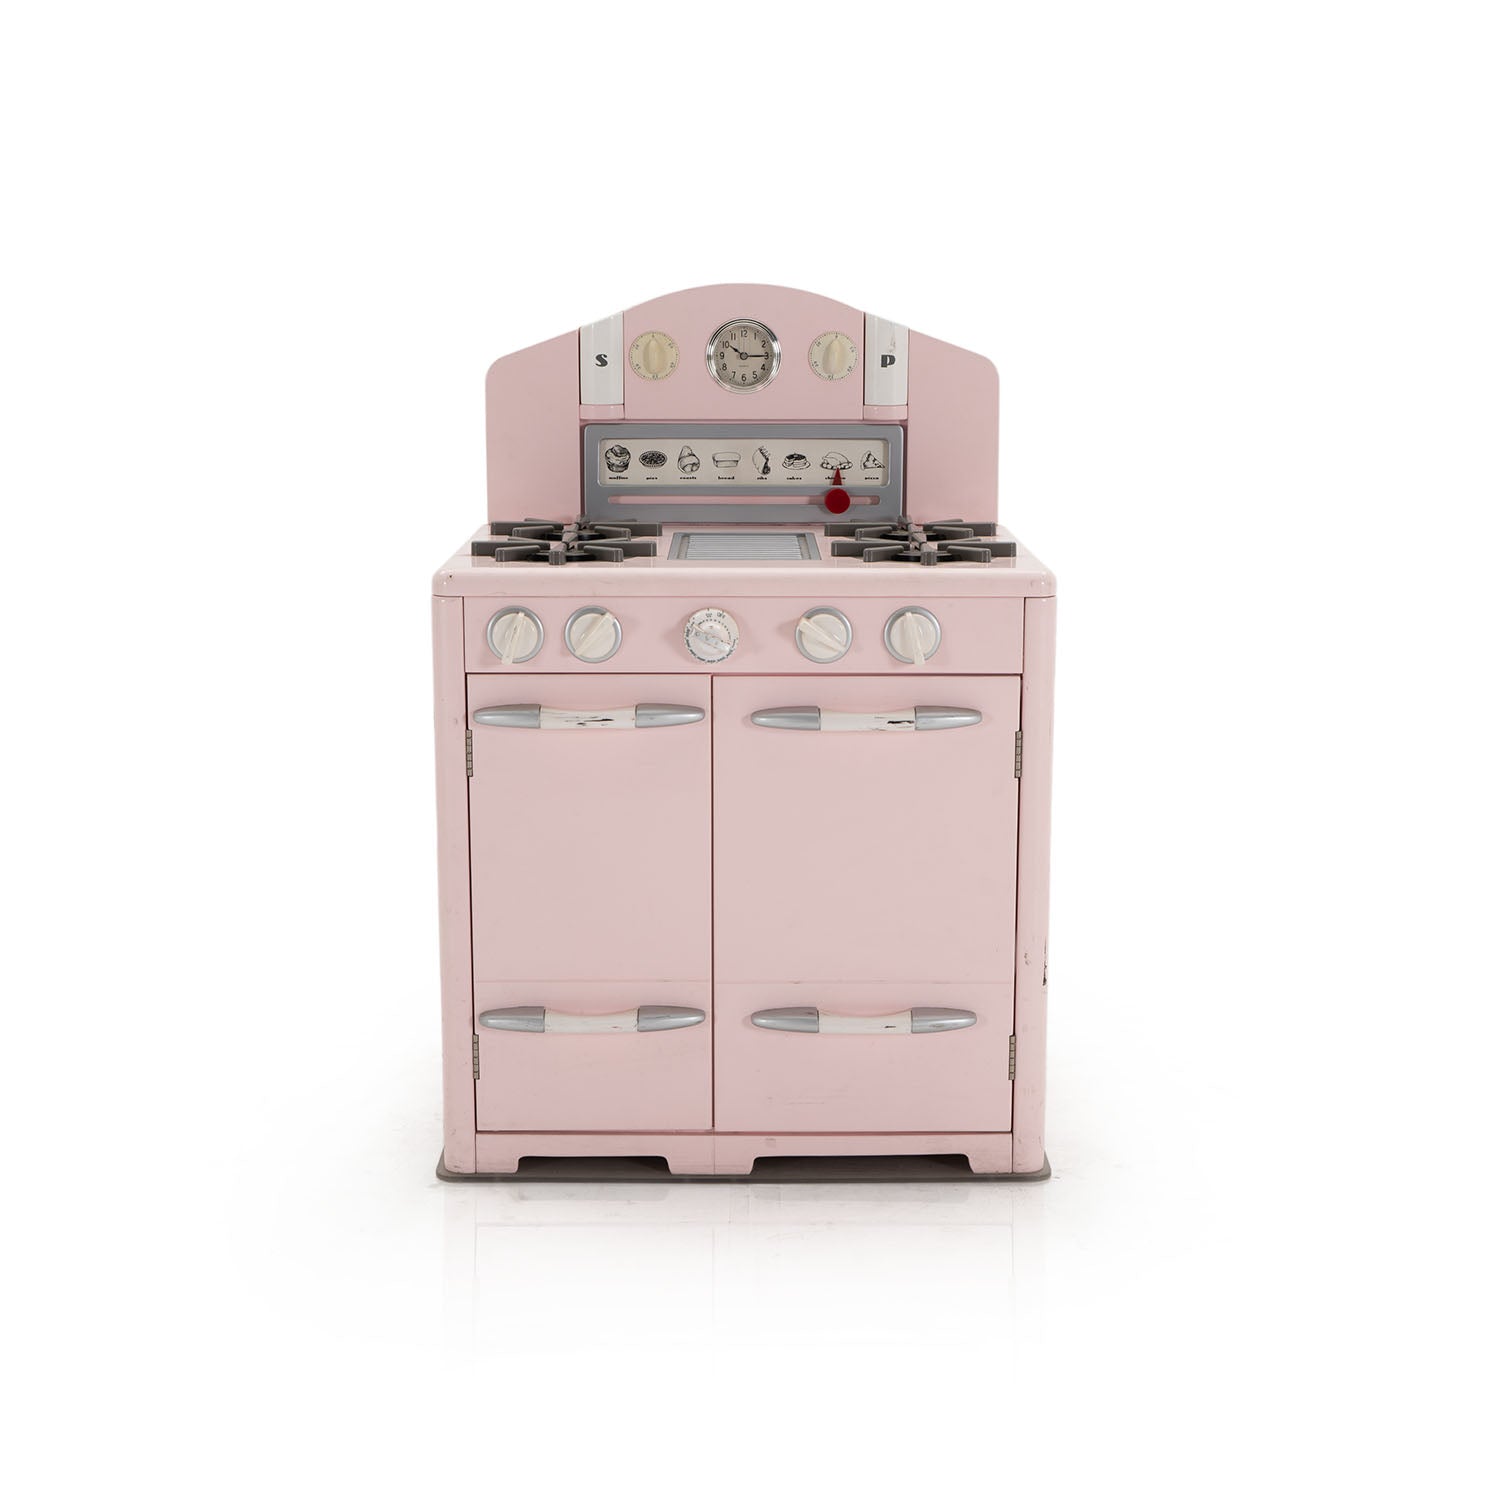 A range of Kitchen Appliances in Pink